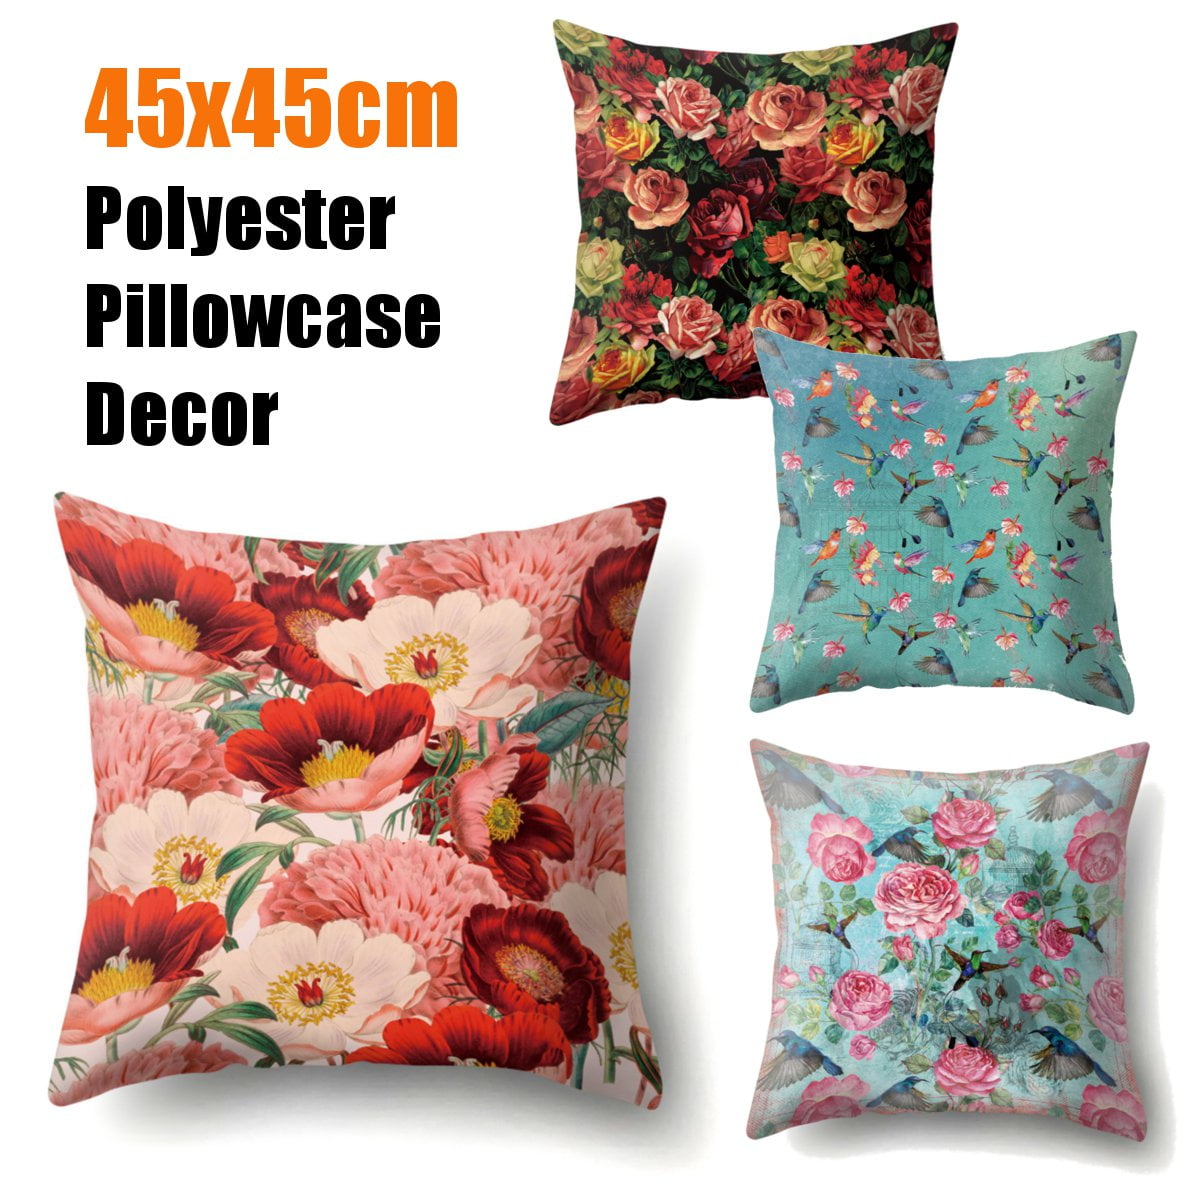 45x45cm Black White Applique Cushion Cover Floral Home Bed Sofa Pillow Cover